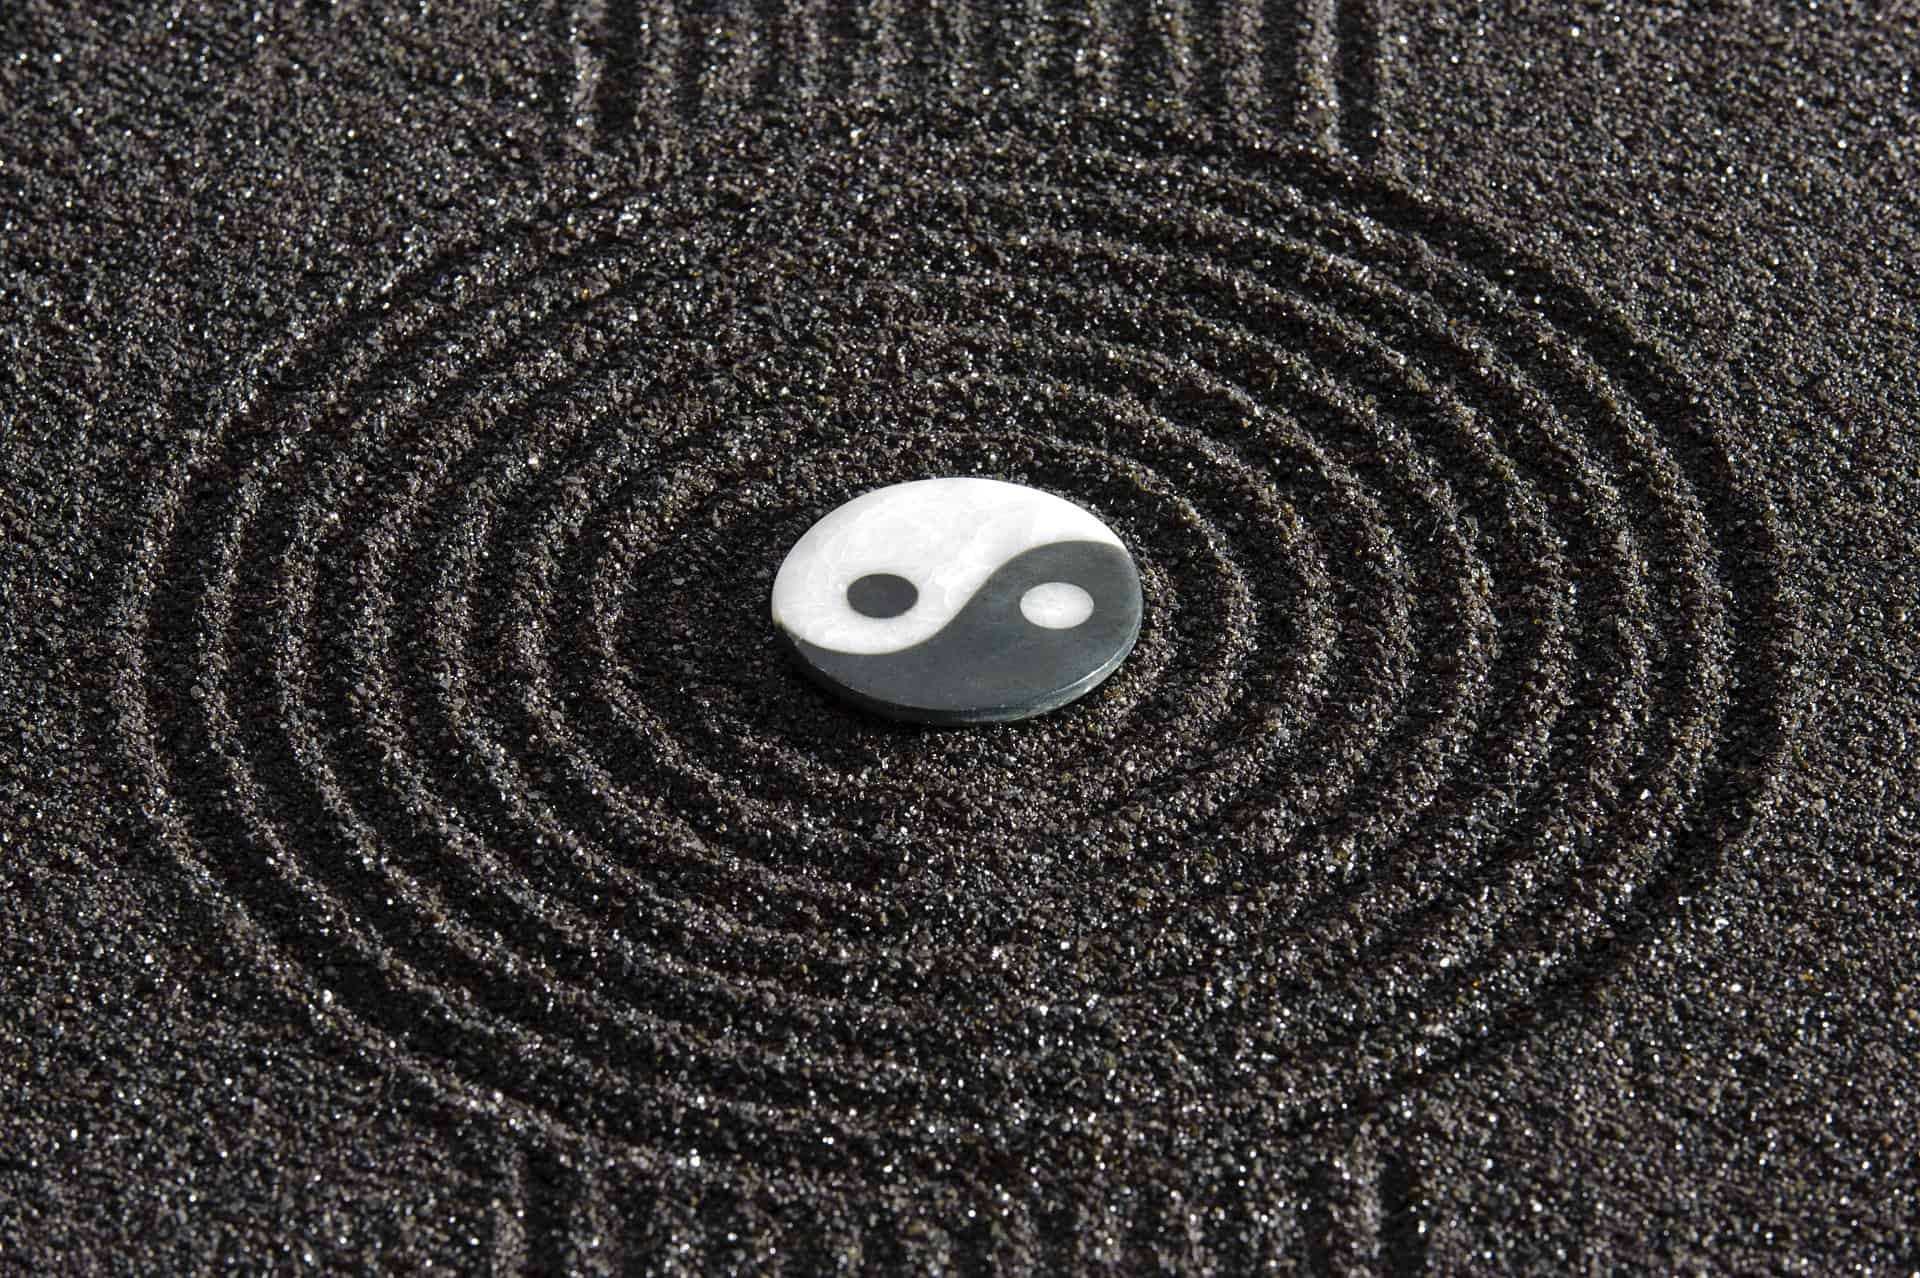 Yin and yang, Taoism, symbol